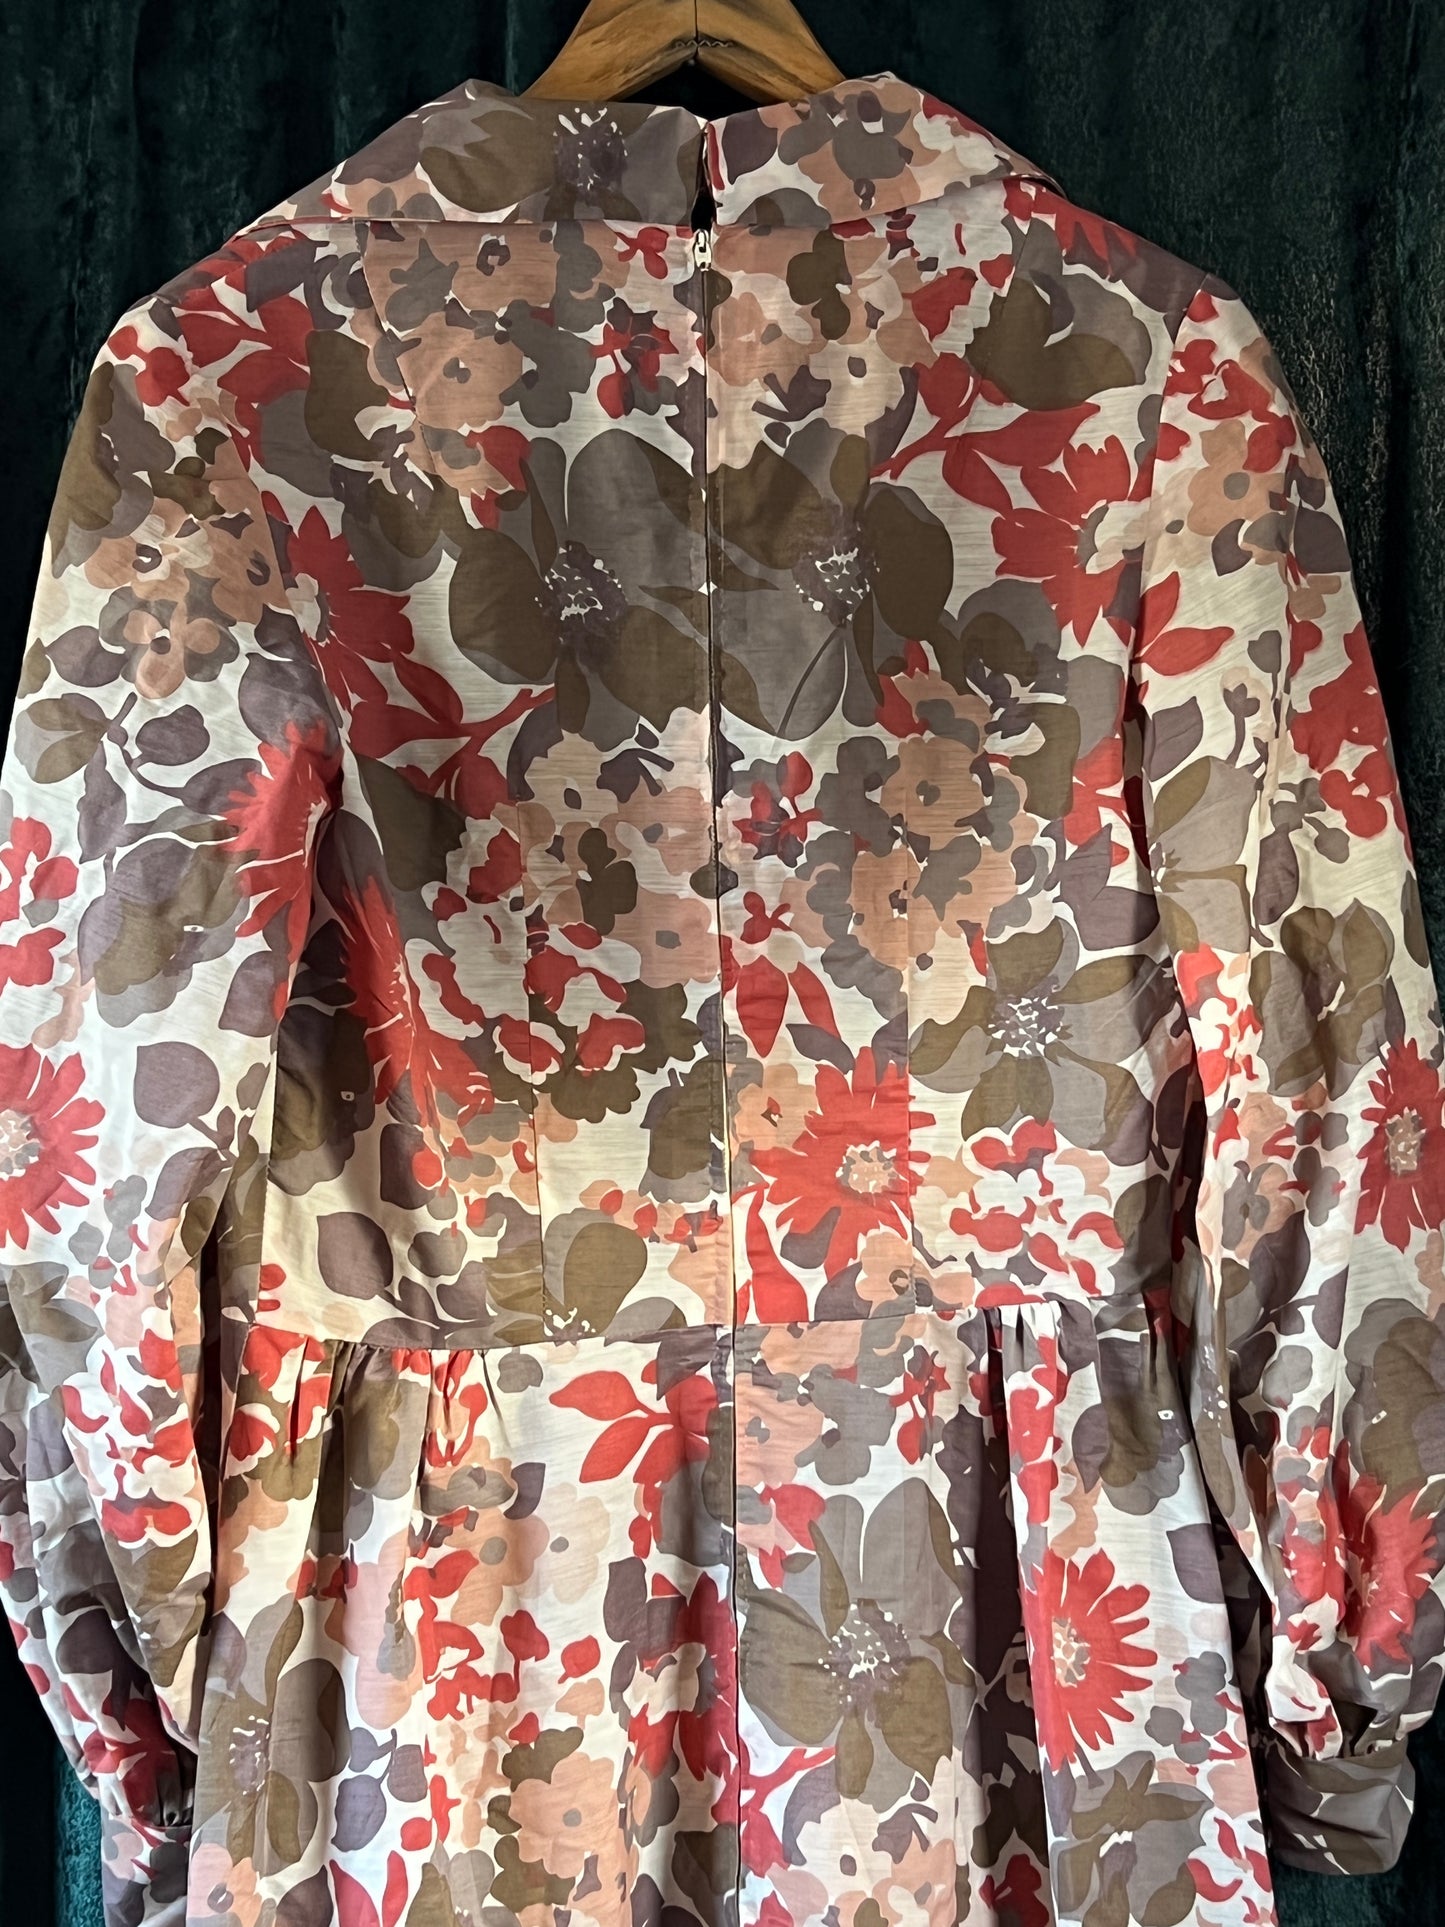 Vintage 1970s floral prairie maxi dress long sleeves matching belt S/M